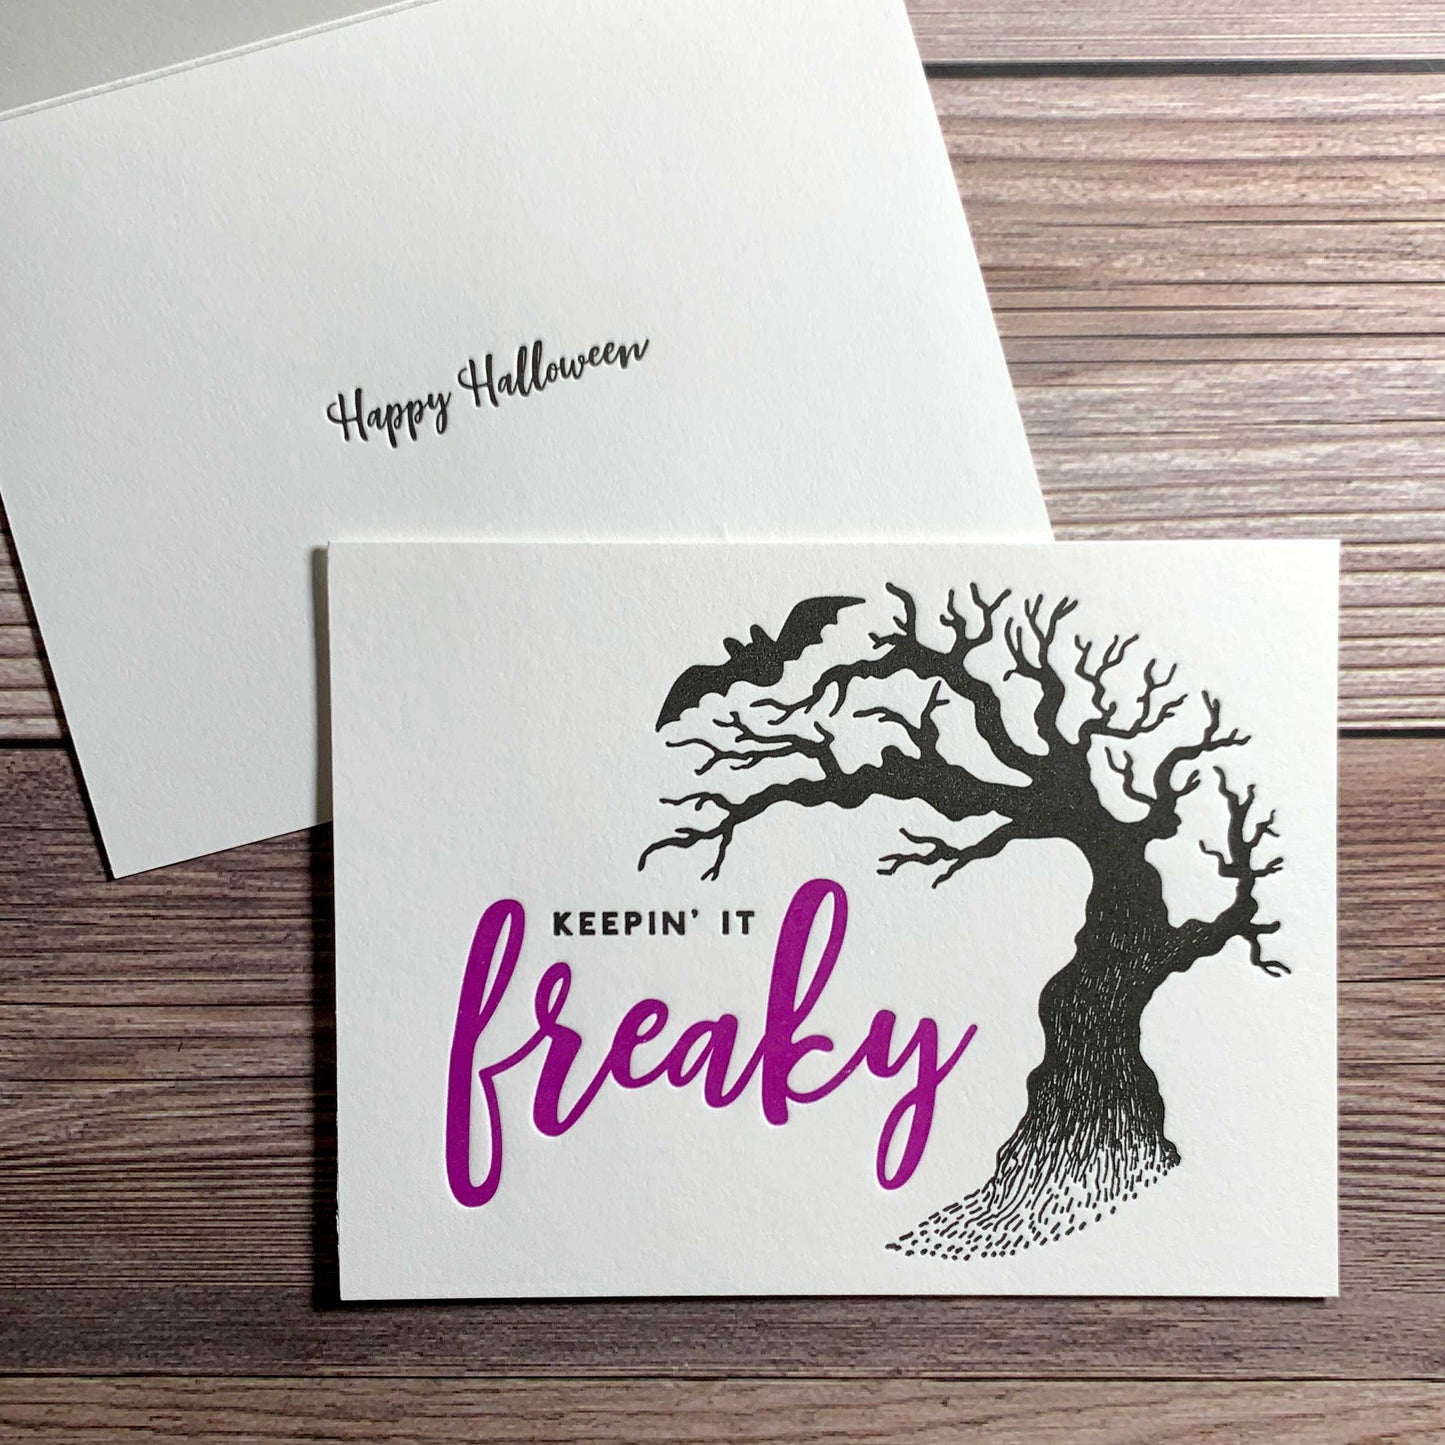 Keepin' It Freaky, Inside Message: Happy Halloween, Spooky Card, Letterpress printed, includes envelope